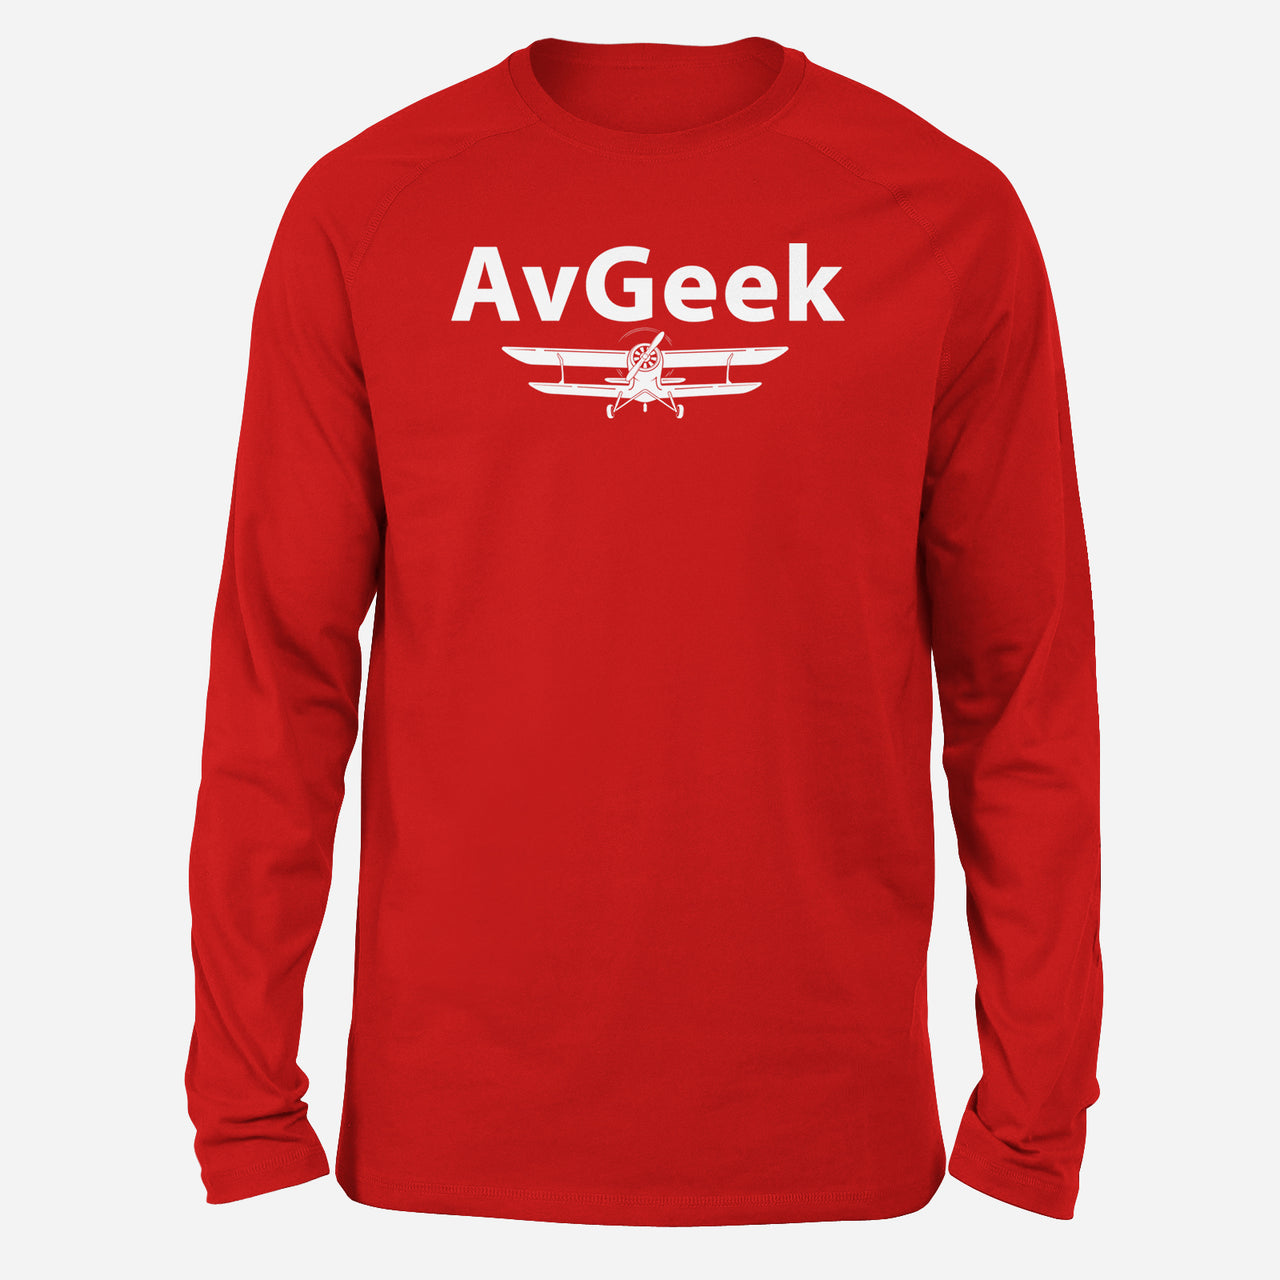 Avgeek Designed Long-Sleeve T-Shirts